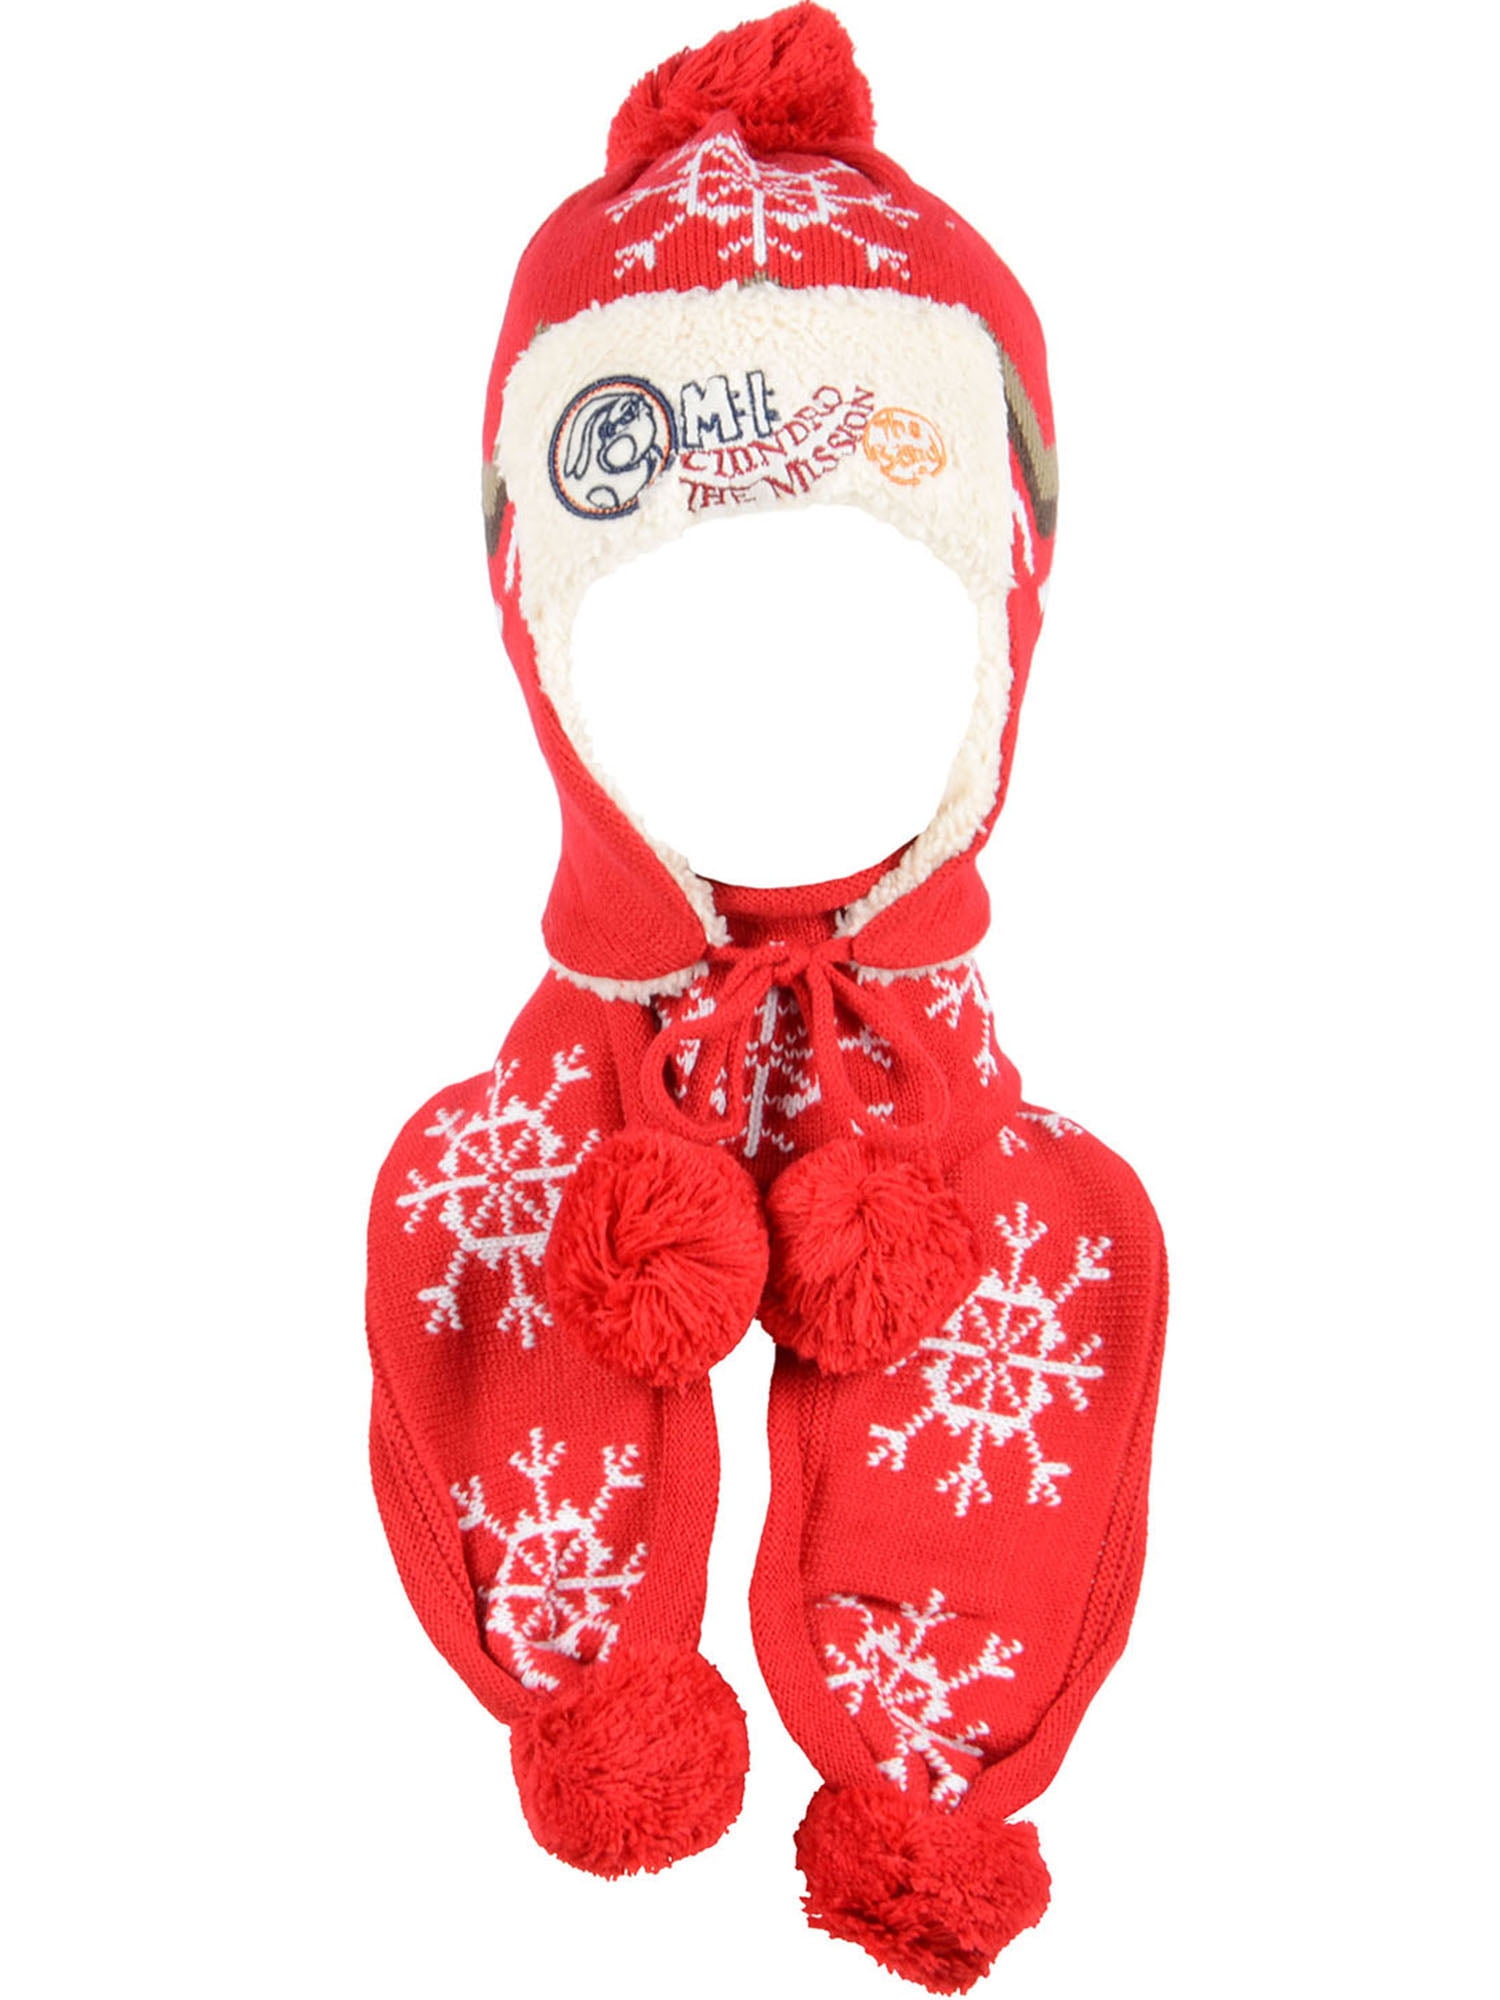 Toddler Kids Boy Girl Fleece Beanie Hat Cap Scarves Christmas Gifts 2 Pcs Set 